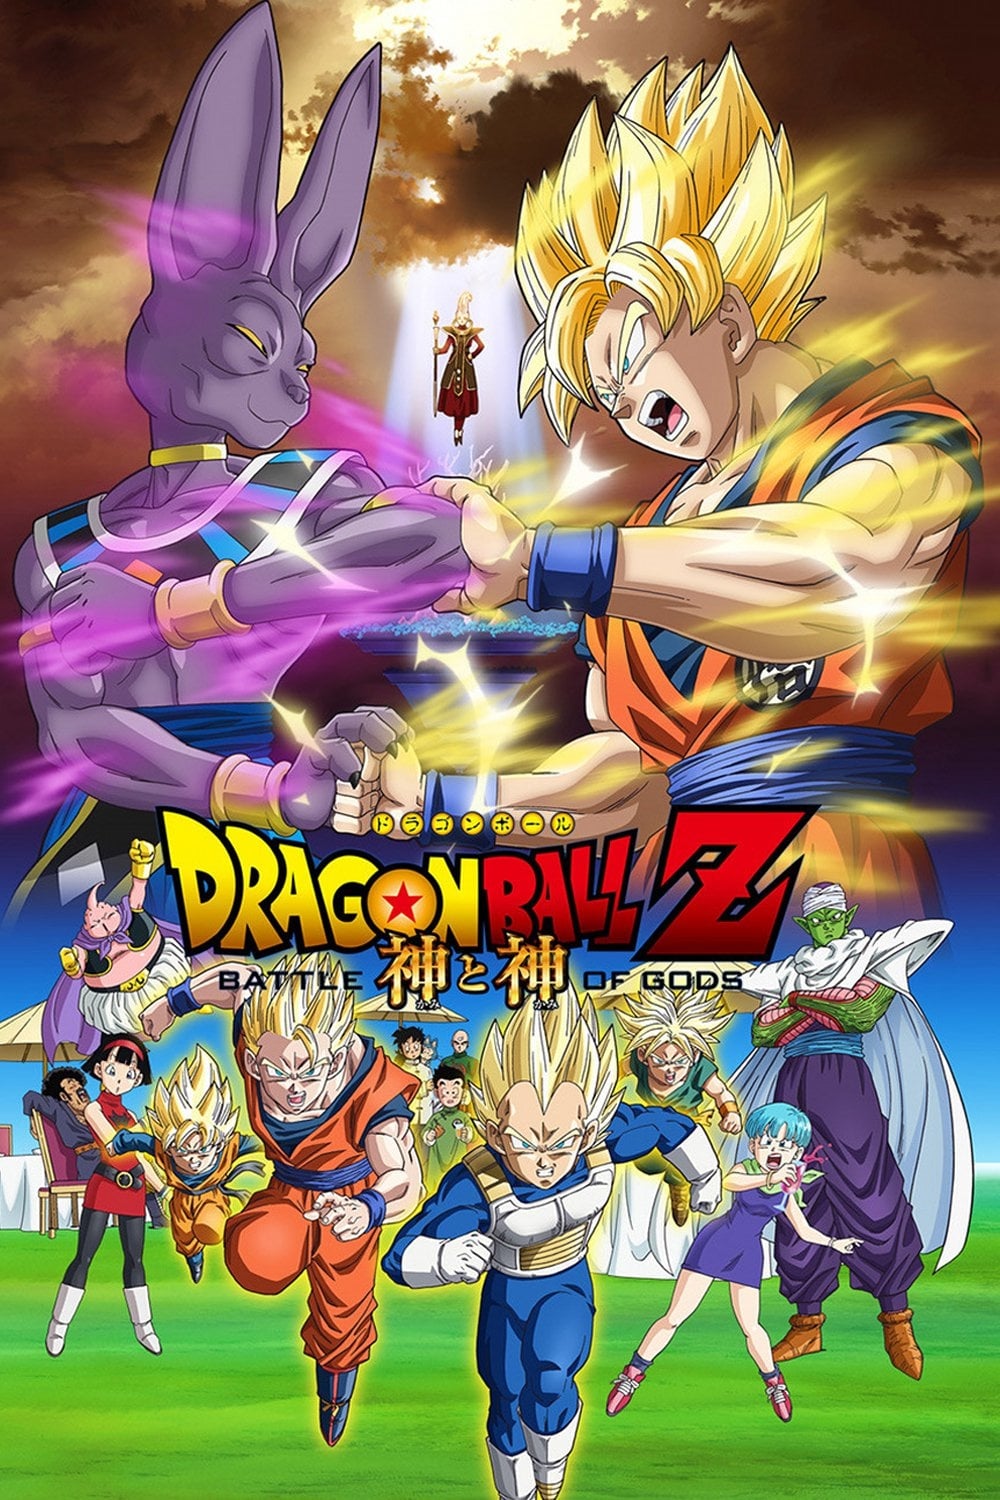 Dragon Ball Z: A Batalha dos Deuses (2013)